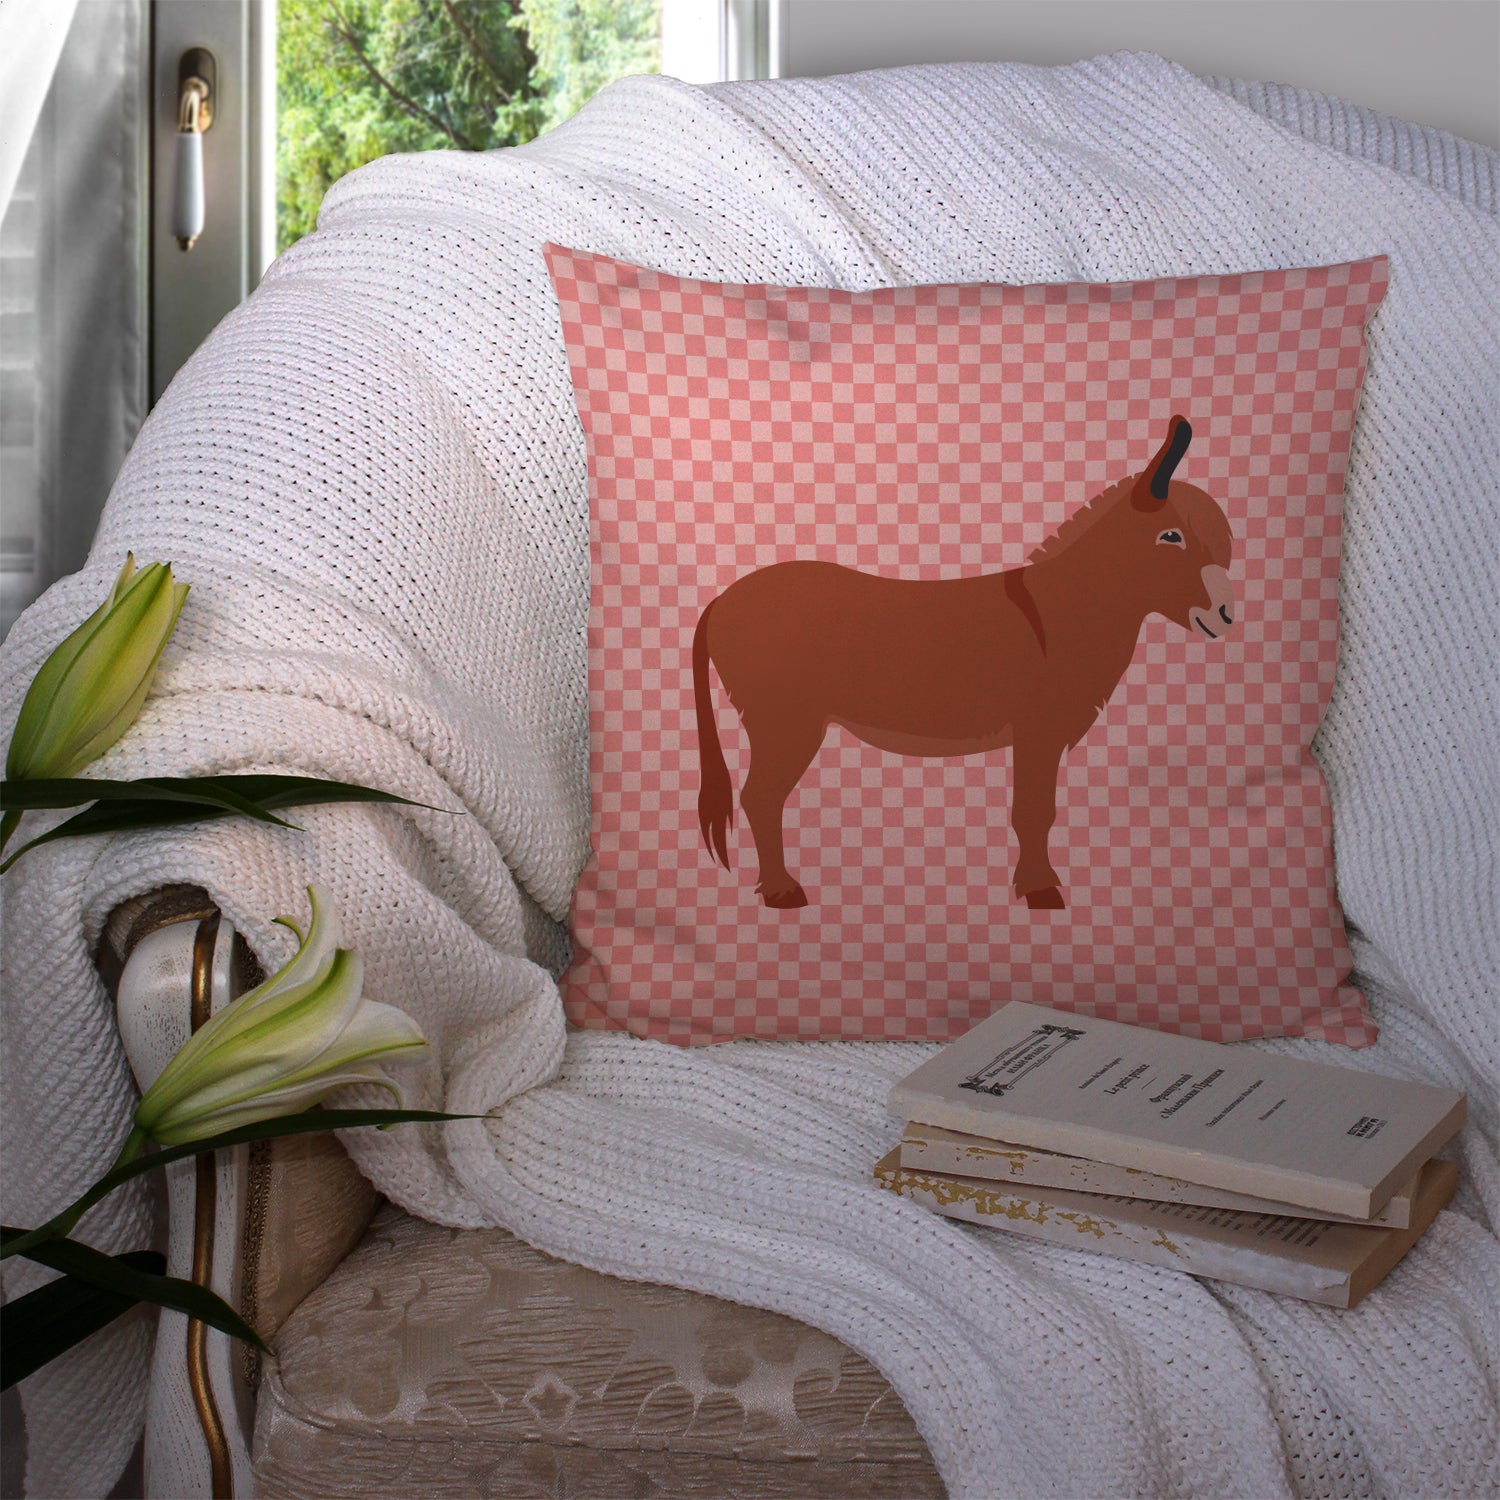 Irish Donkey Pink Check Fabric Decorative Pillow BB7848PW1414 - the-store.com